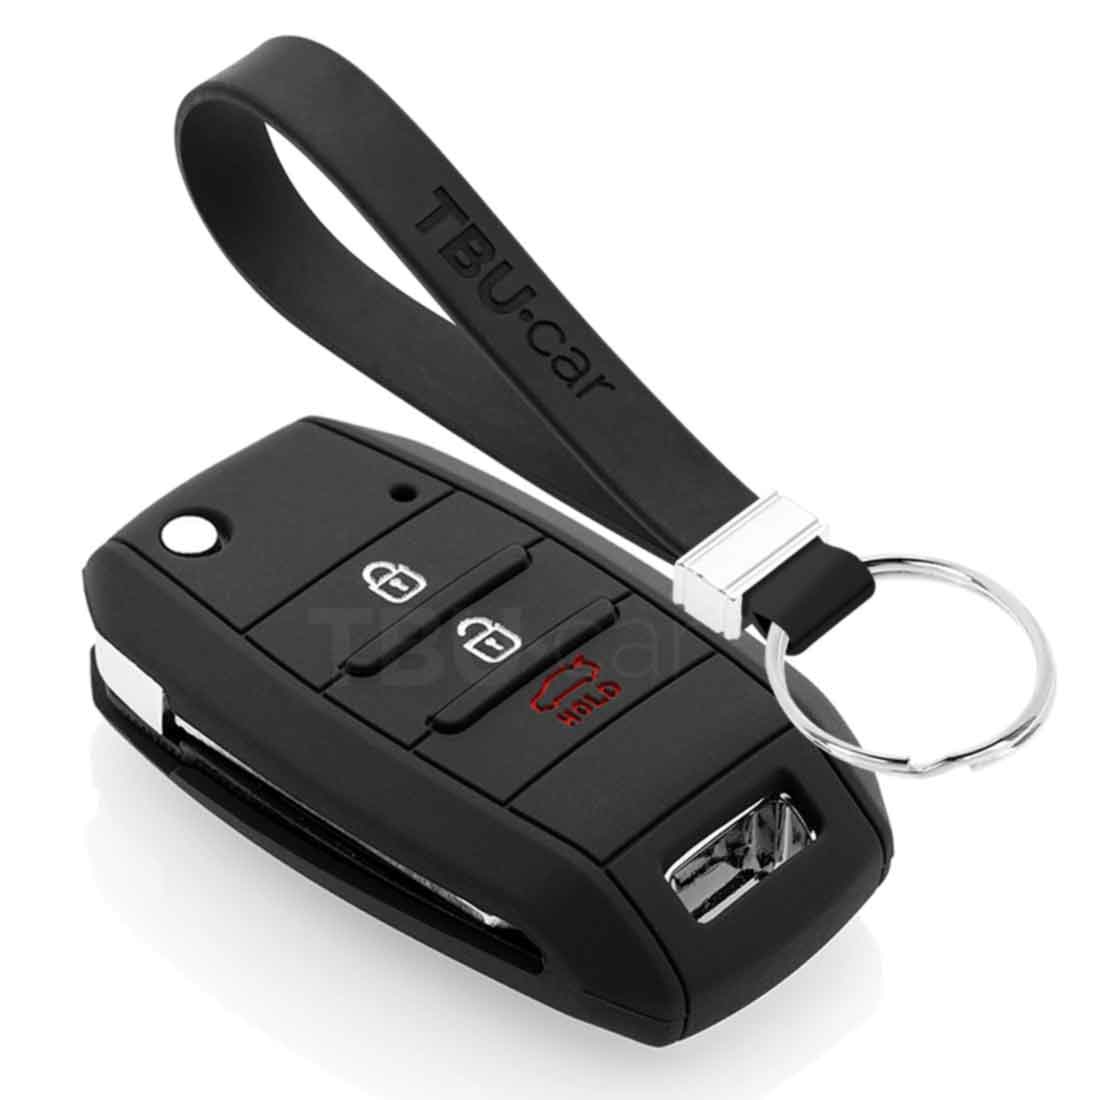 TBU car TBU car Autoschlüssel Hülle kompatibel mit Kia 3 Tasten - Schutzhülle aus Silikon - Auto Schlüsselhülle Cover in Schwarz